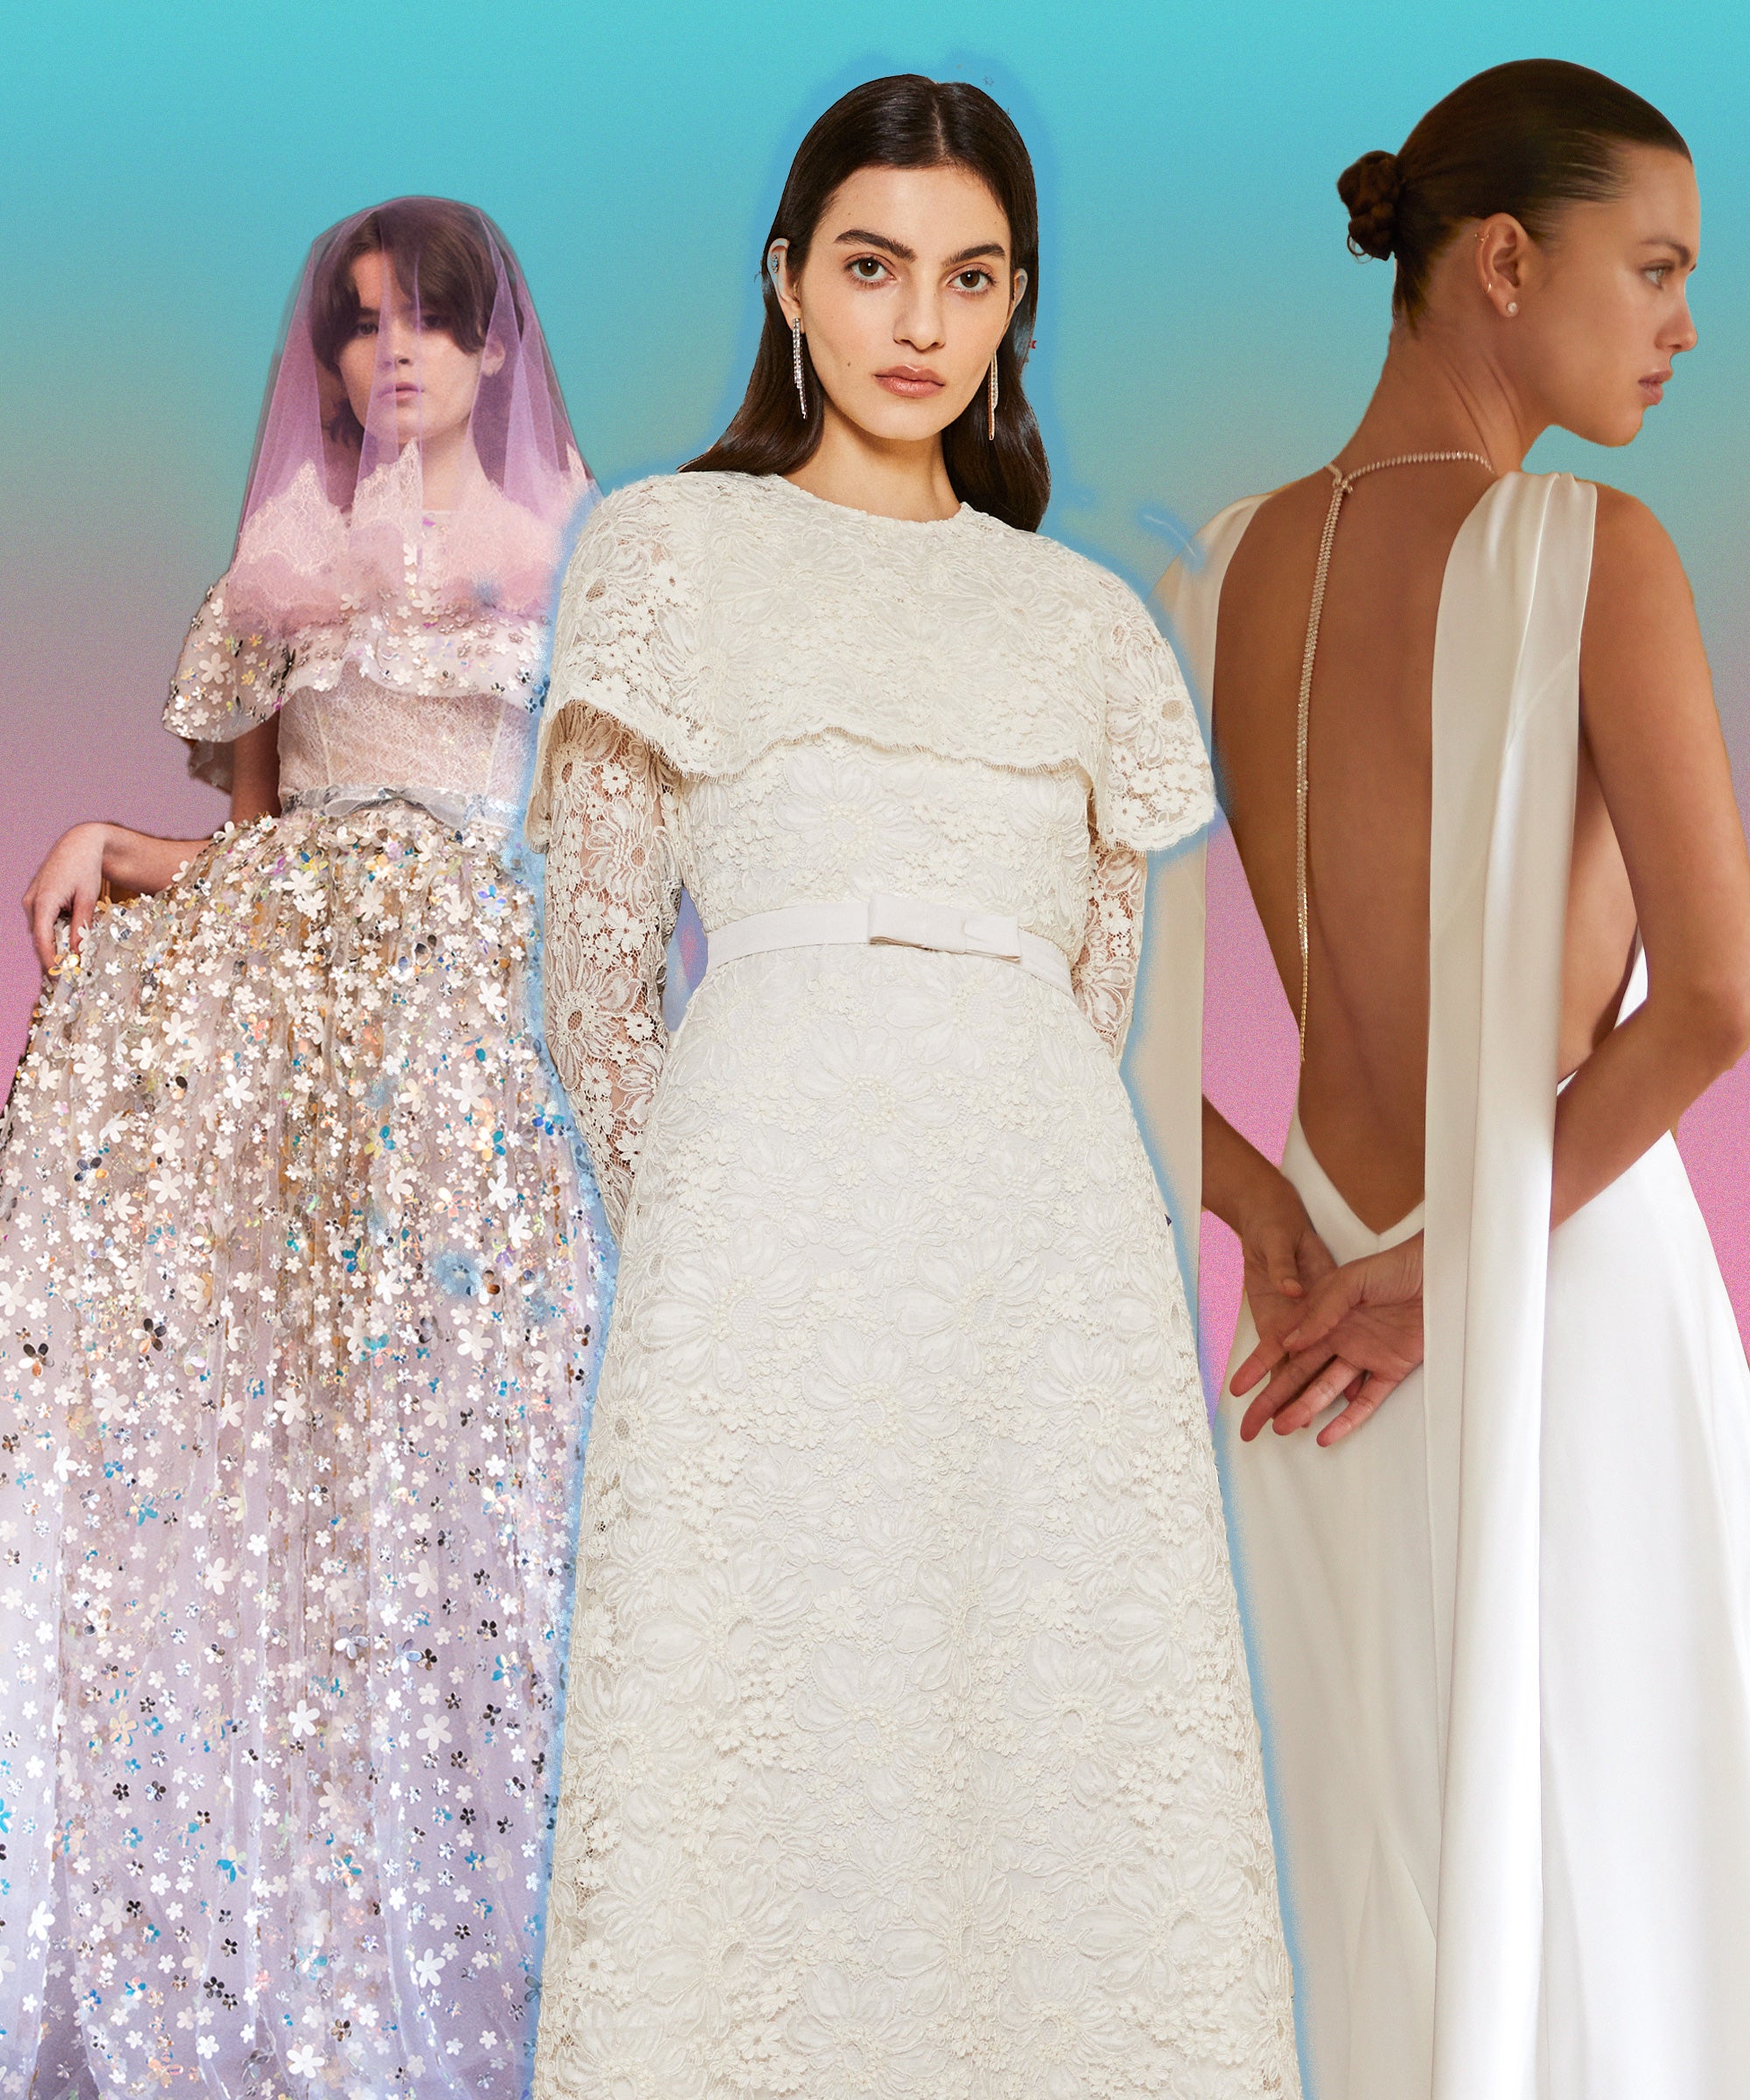 Consider the Mini Wedding Dress a Major Bridal Fashion Trend